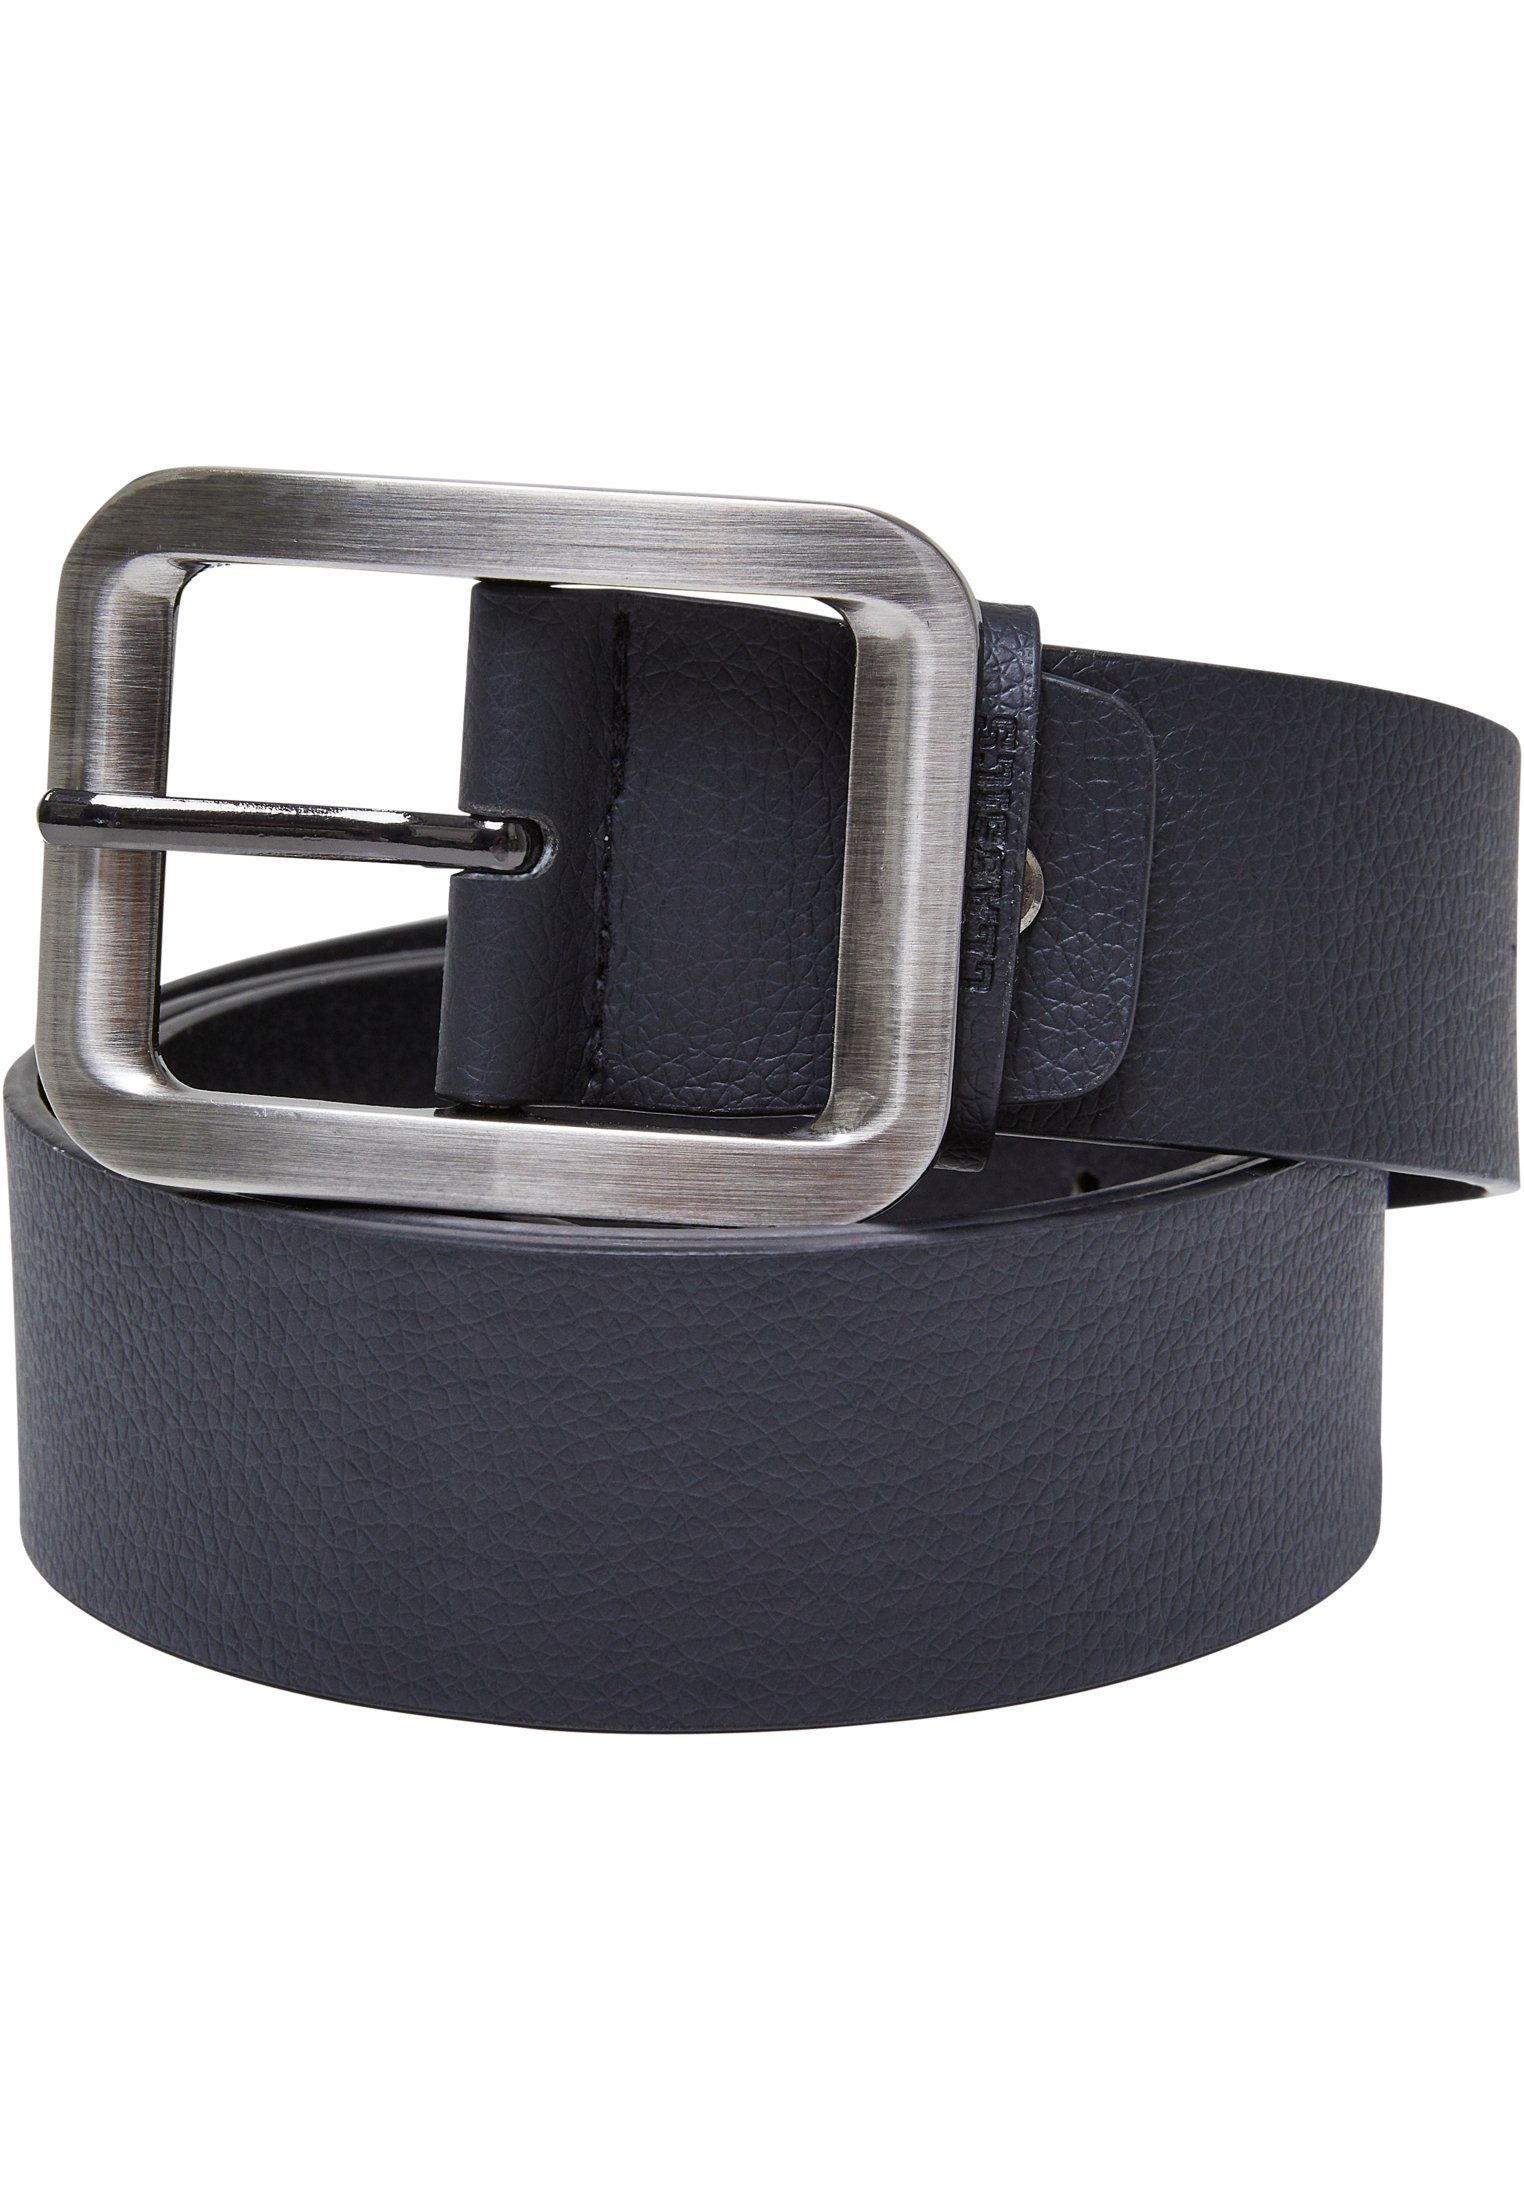 Hüftgürtel Leather Basic Belt CLASSICS Synthetic URBAN Accessoires Thorn Buckle